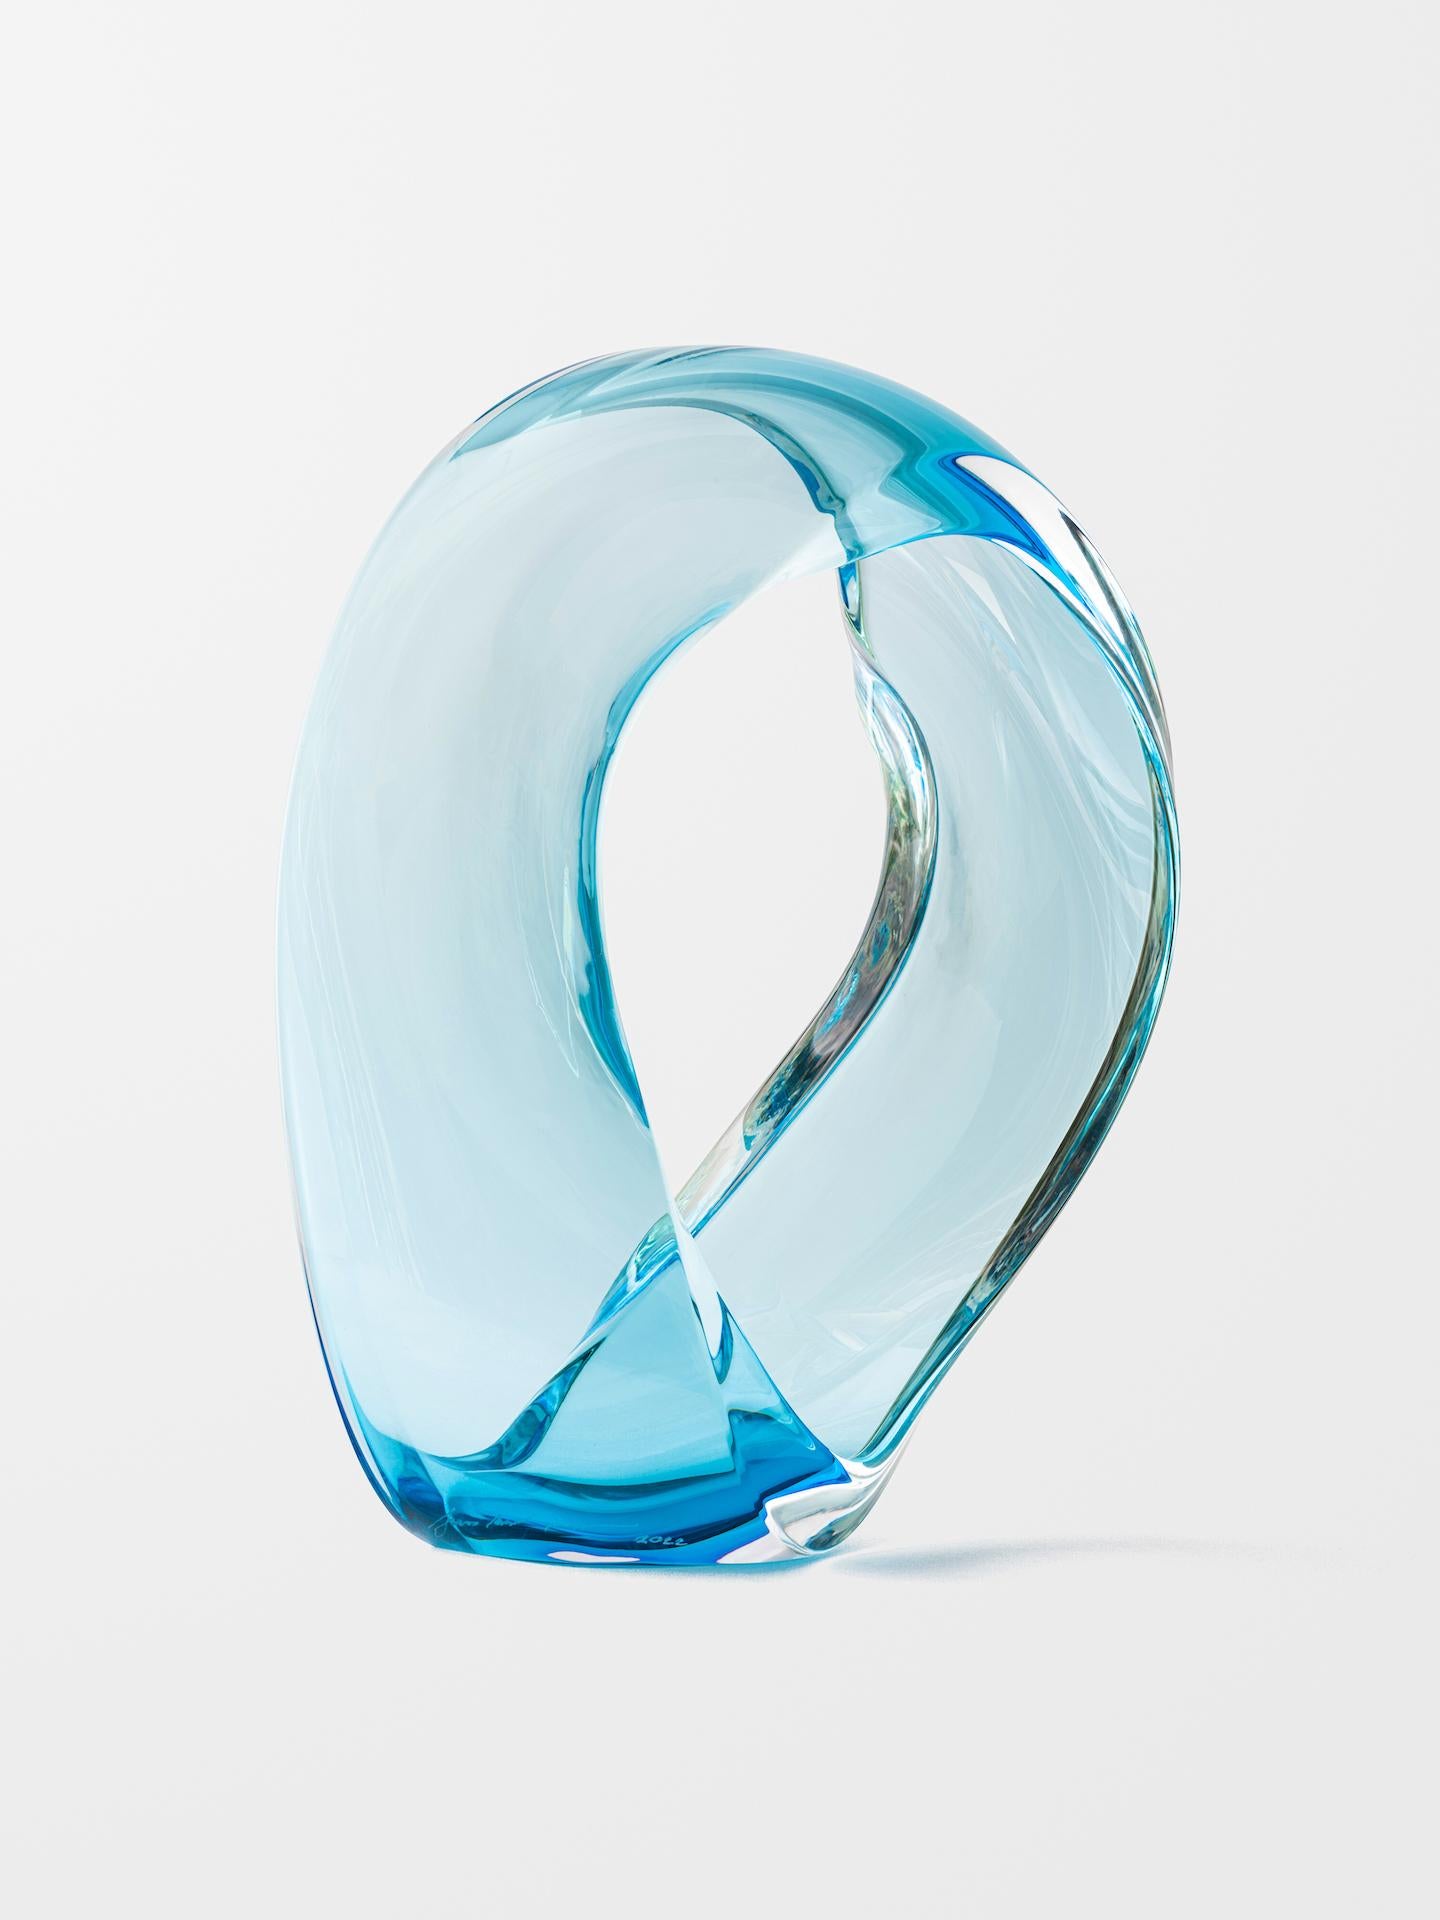 Jonas Noël Niedermann
LOOP (Sky Blue), 2022
Blown glass
11.50 x 8.50 x 4 in.